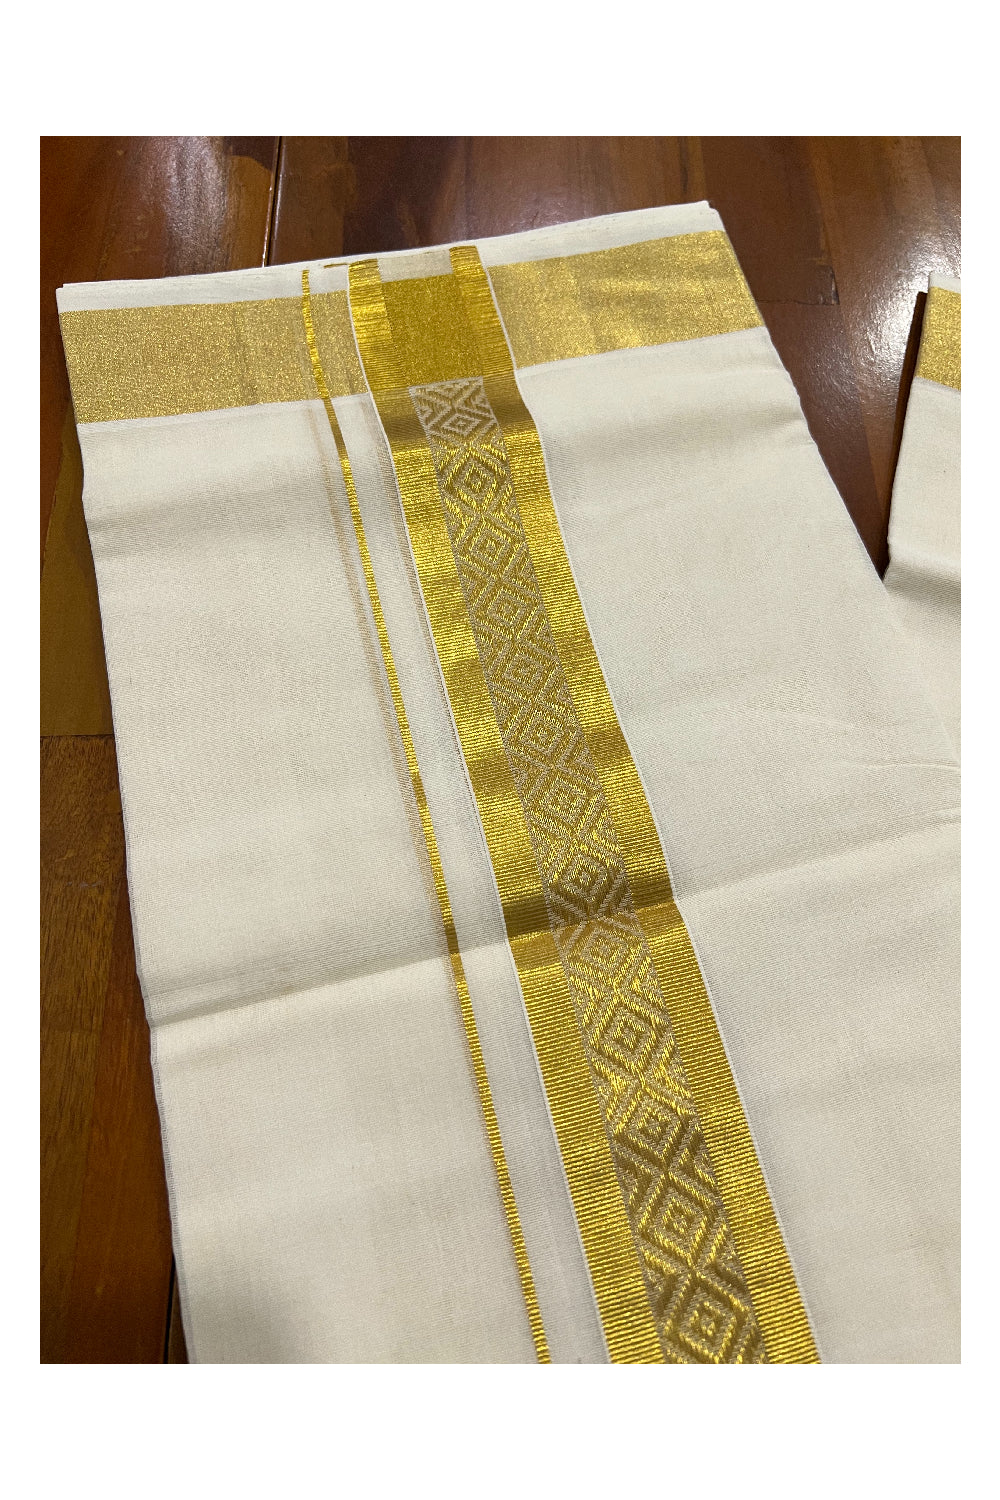 Southloom Balaramapuram Handloom Pure Cotton Wedding Mundu with Kasavu Woven Pattern Border (South Indian Dhoti)